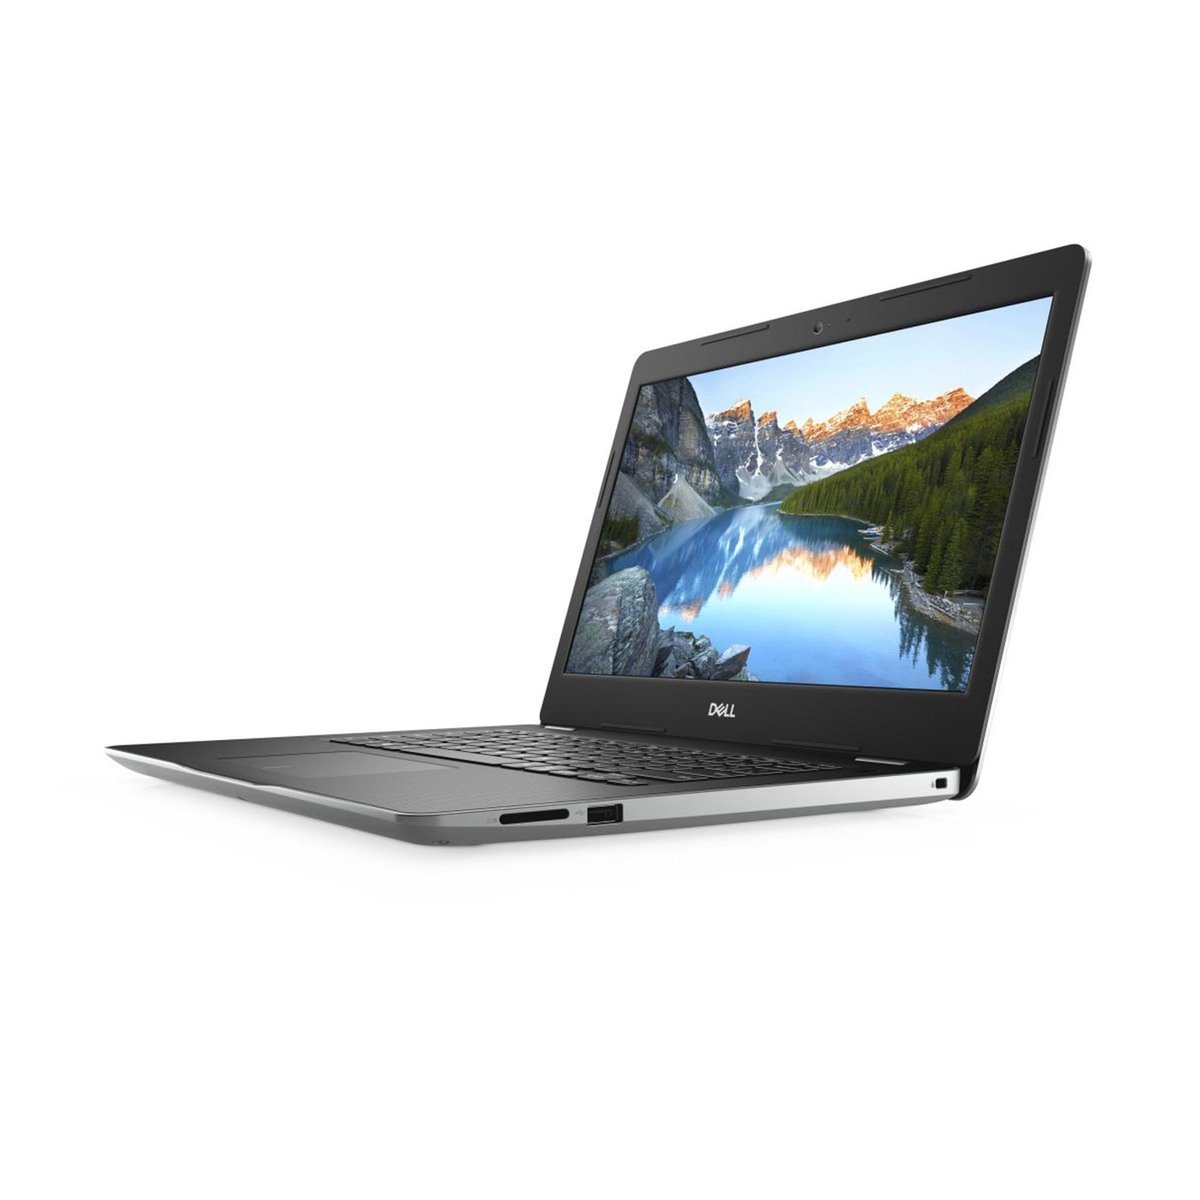 Dell Notebook 3482-INS-1405, Intel Celeron N4000,4GB RAM, 64GB SSD, Intel HD Graphics, 14"HD LED Display, Windows 10, Silver